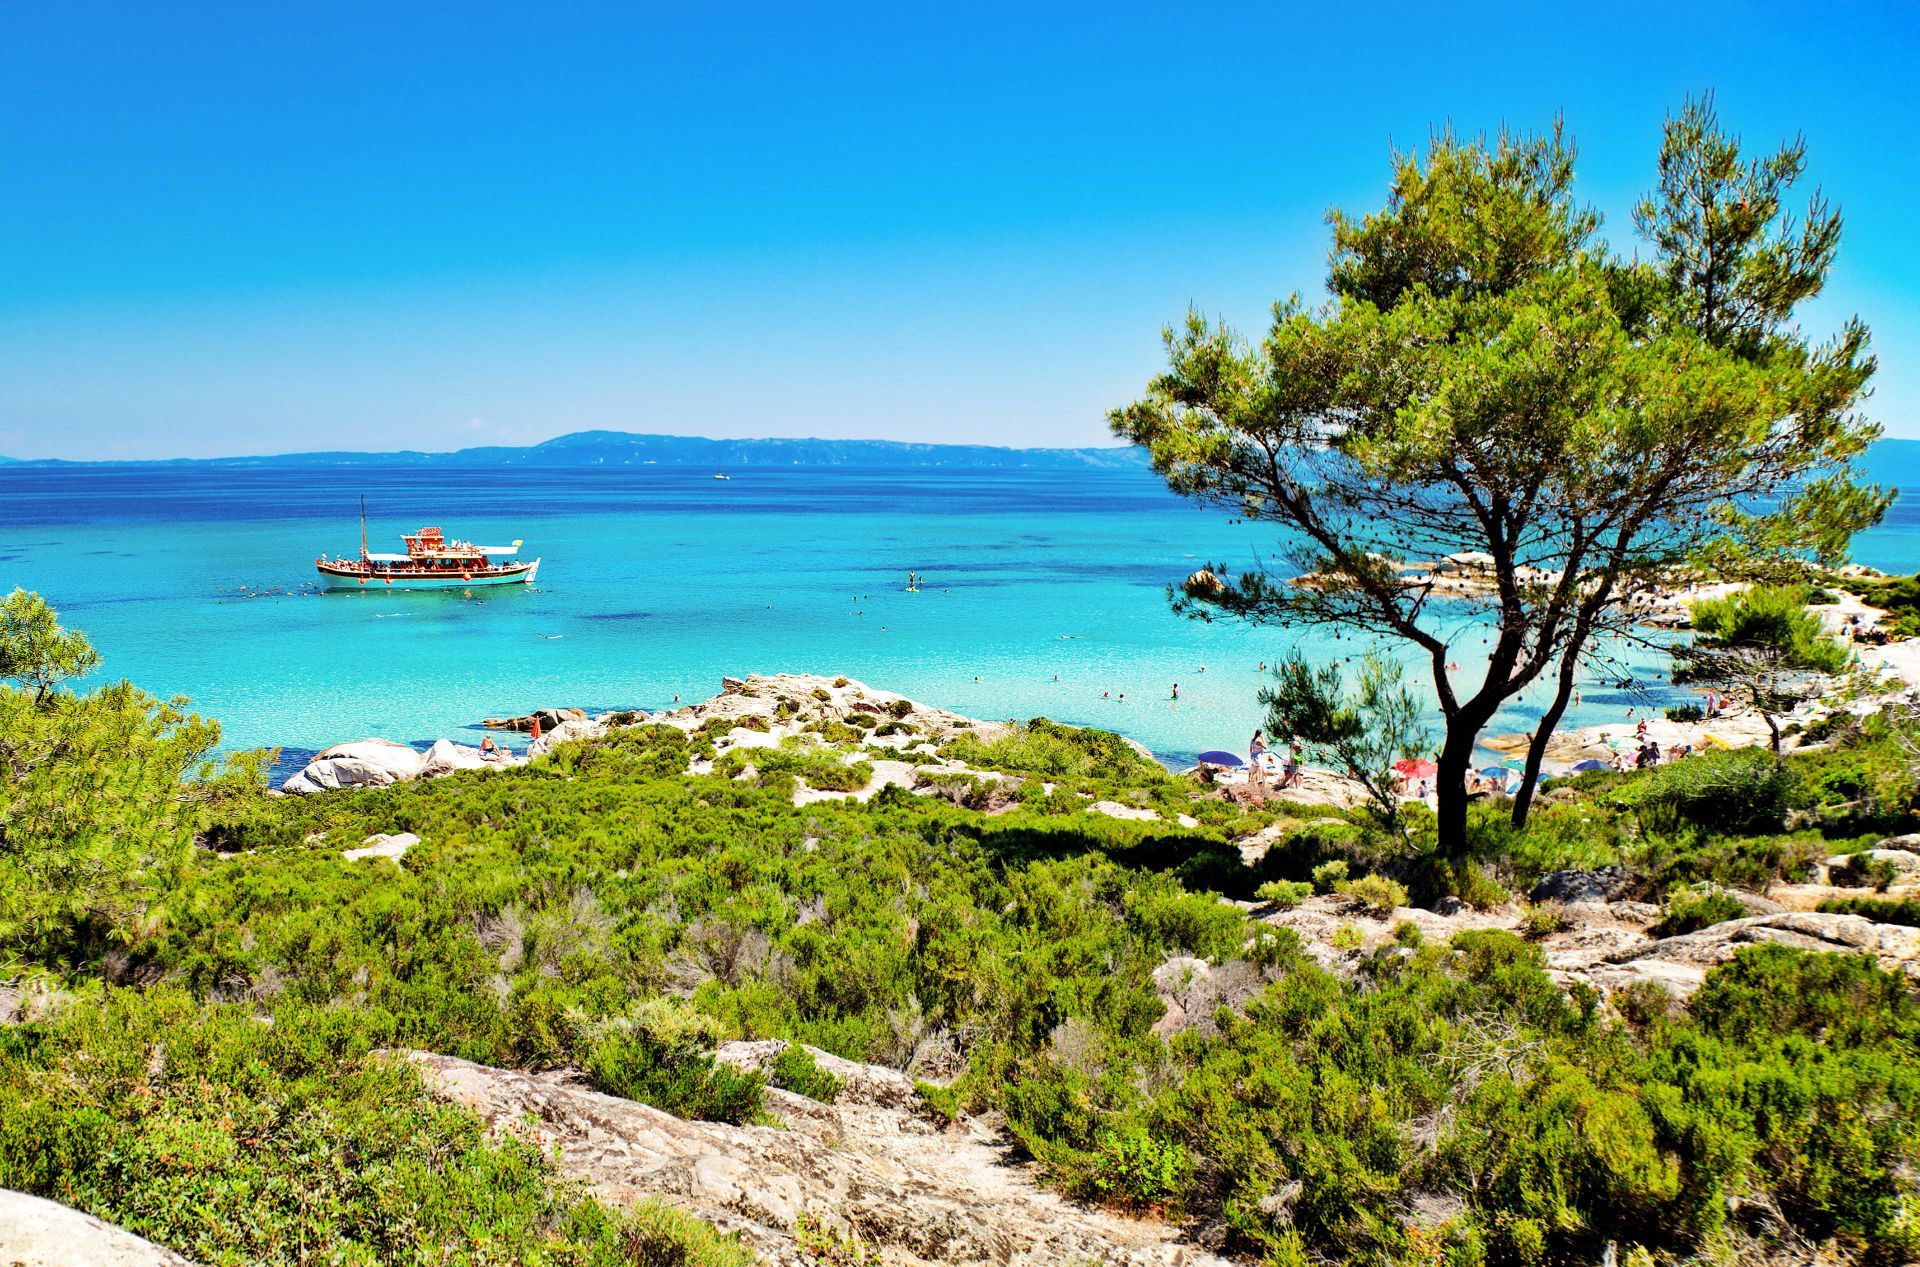 Halkidiki Greece: The beach of Kavourotrypes